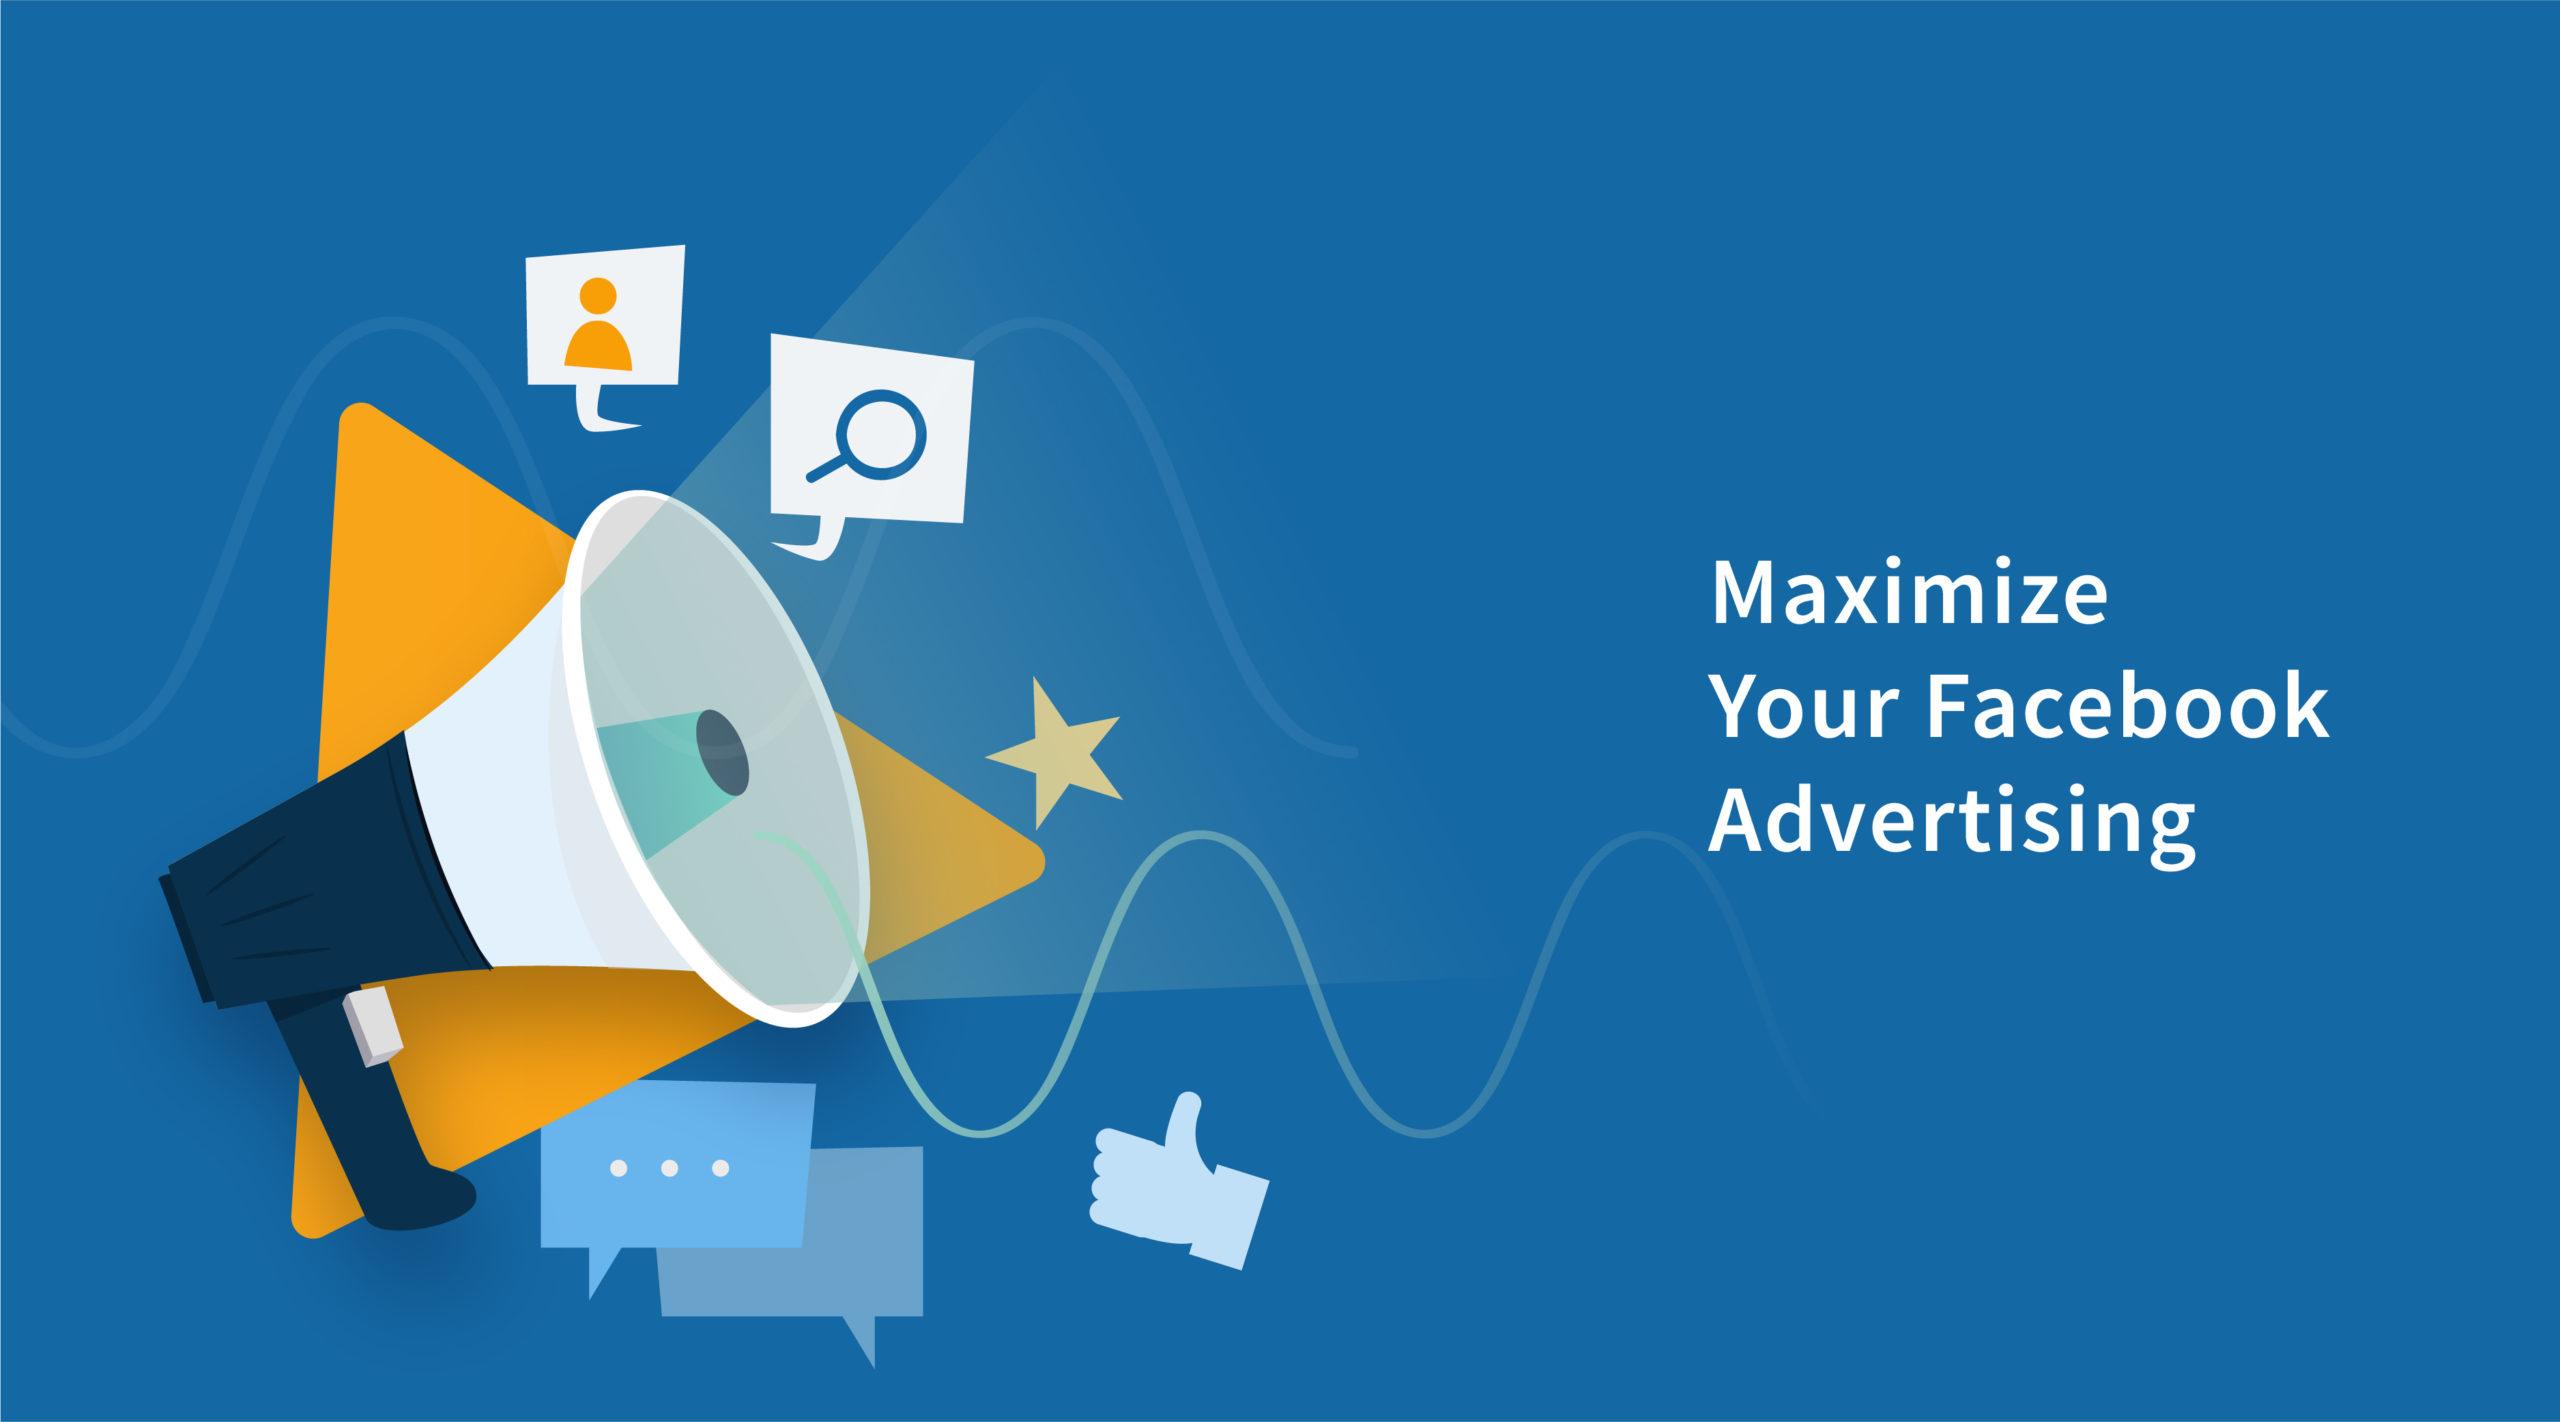 6 Ways to Maximize Your Facebook Advertising